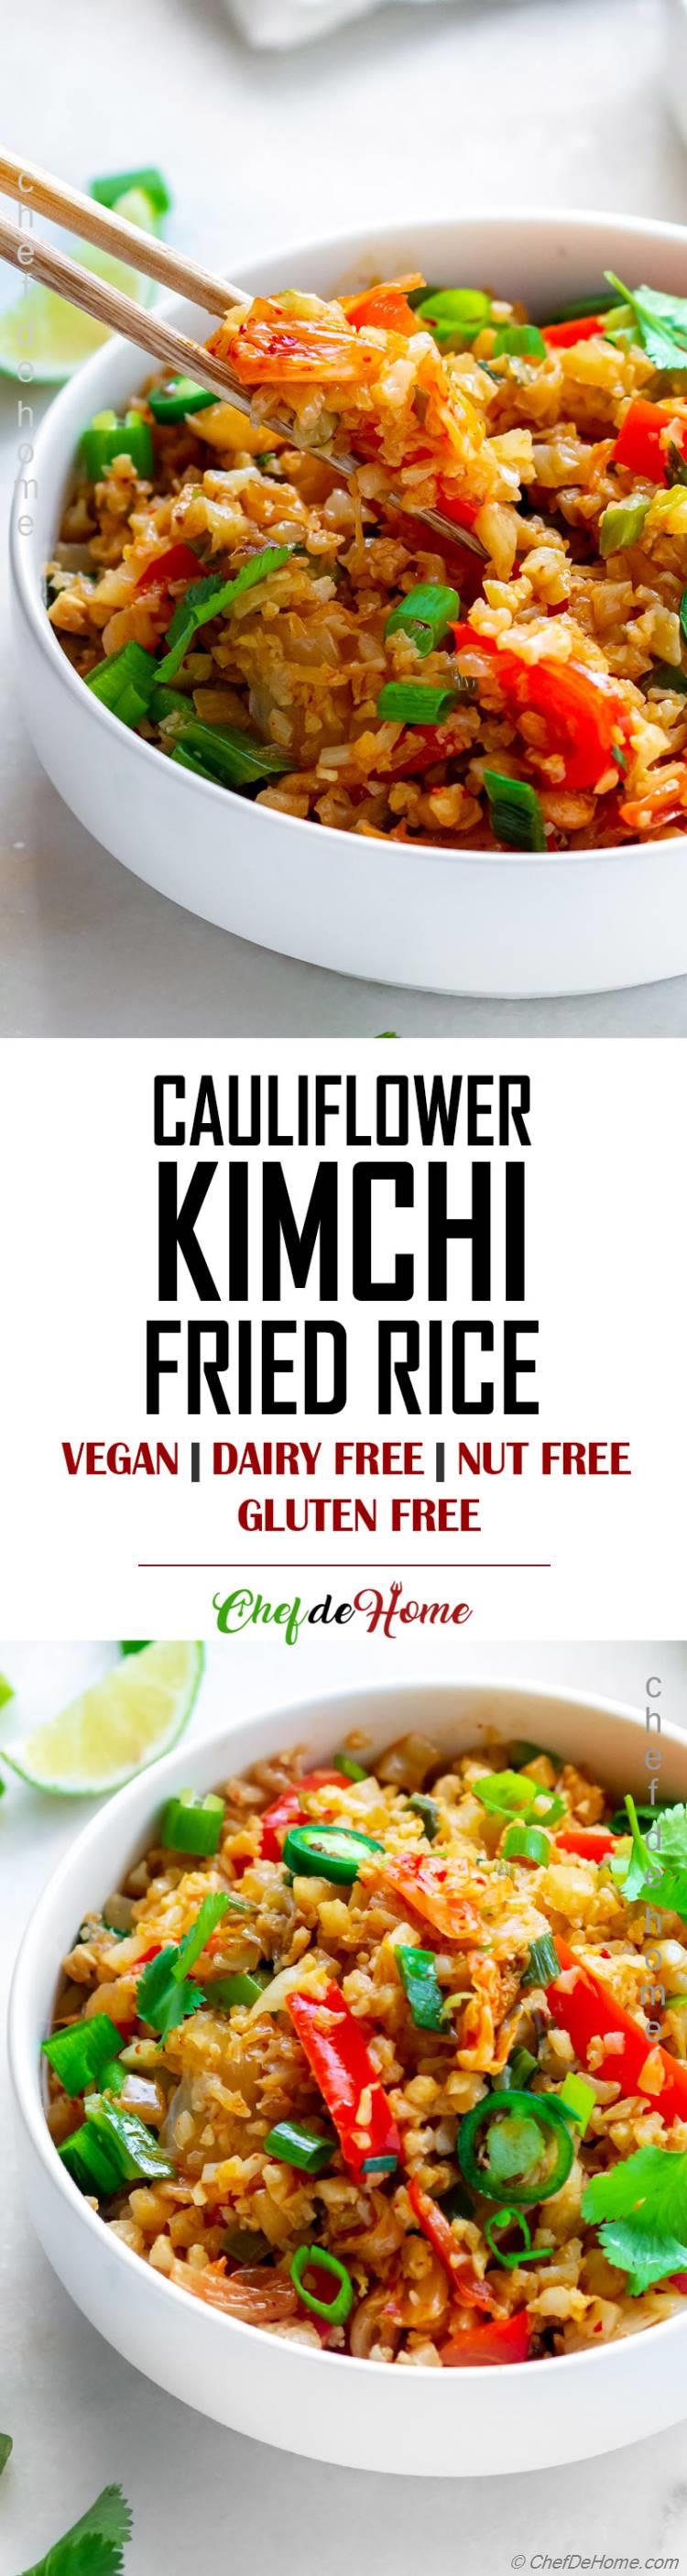 Fried Rice Kimchi Cauliflower Recipe